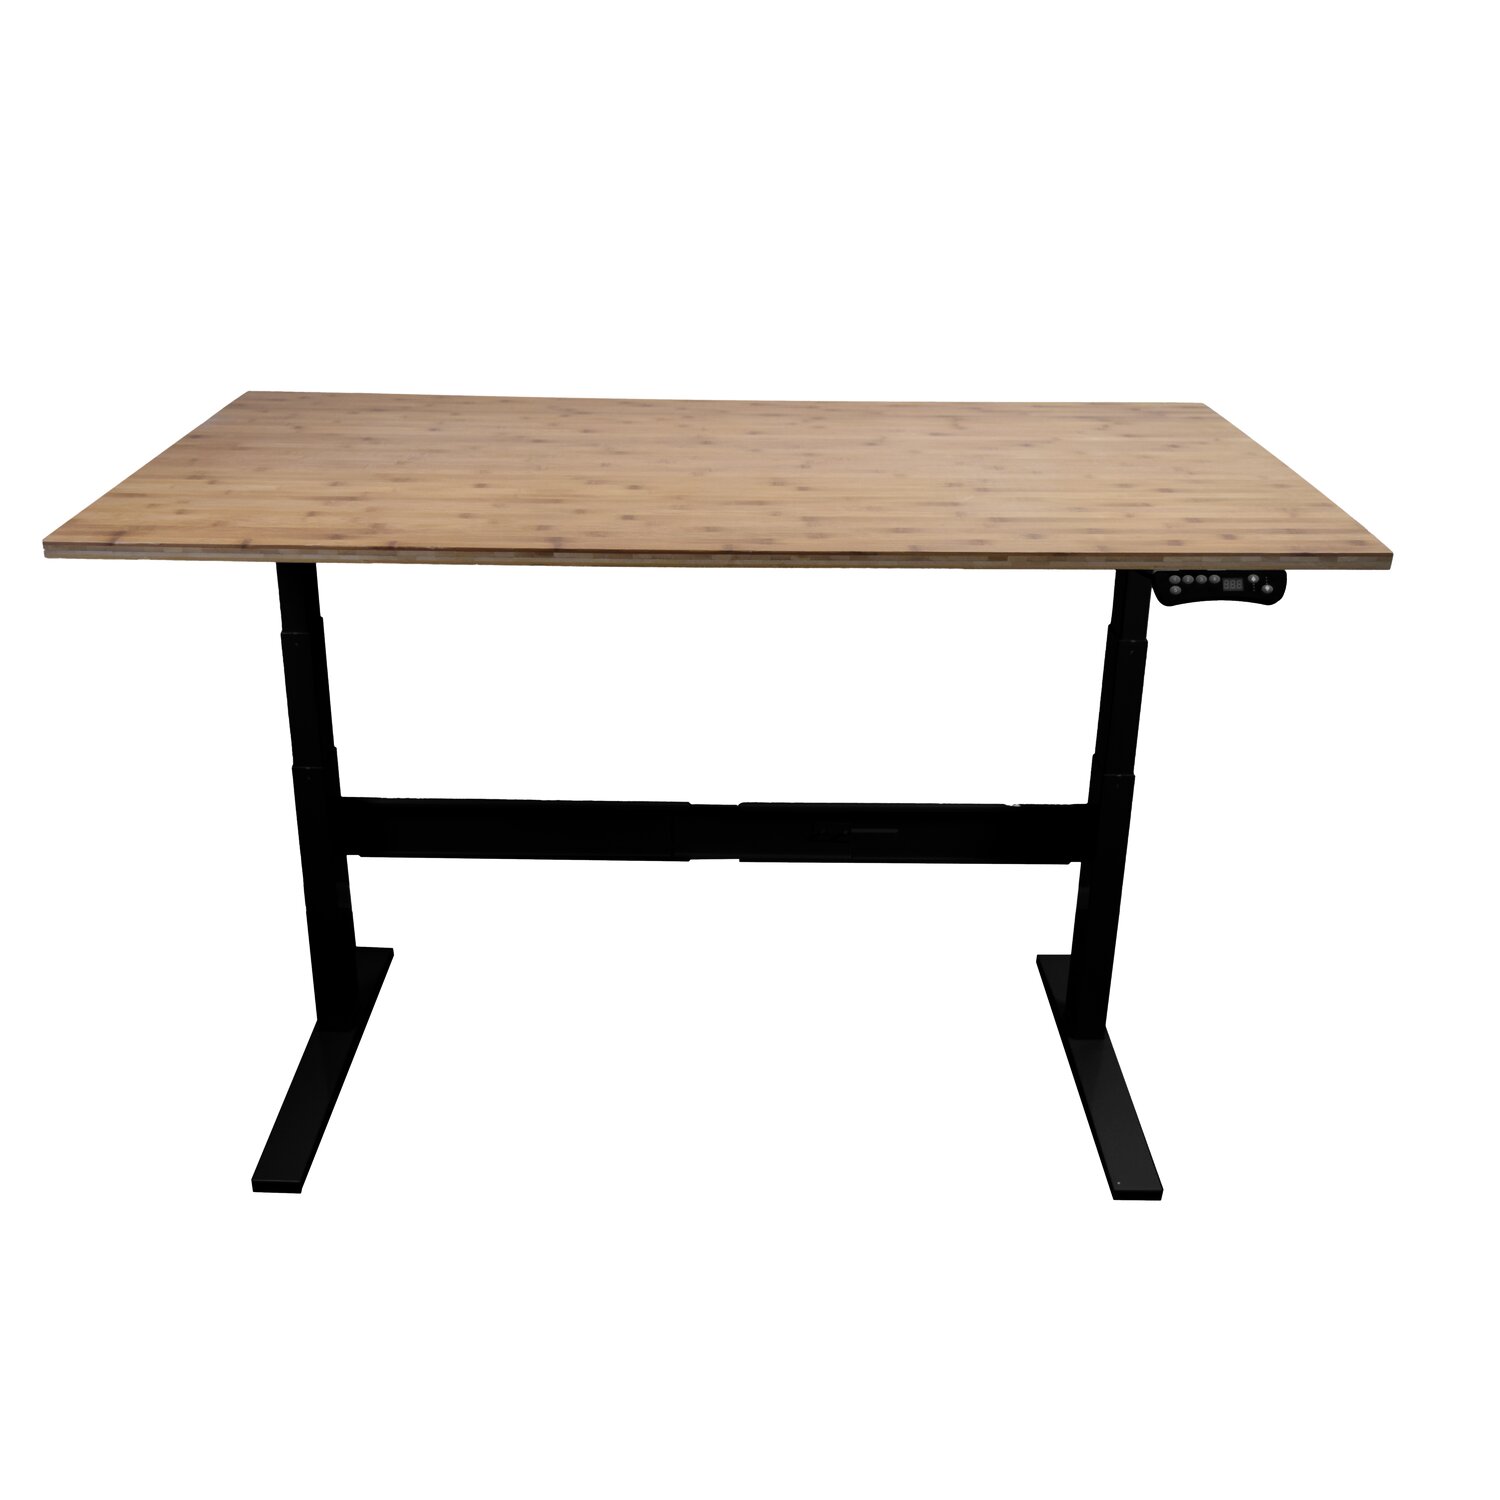 Adjustable height desks 